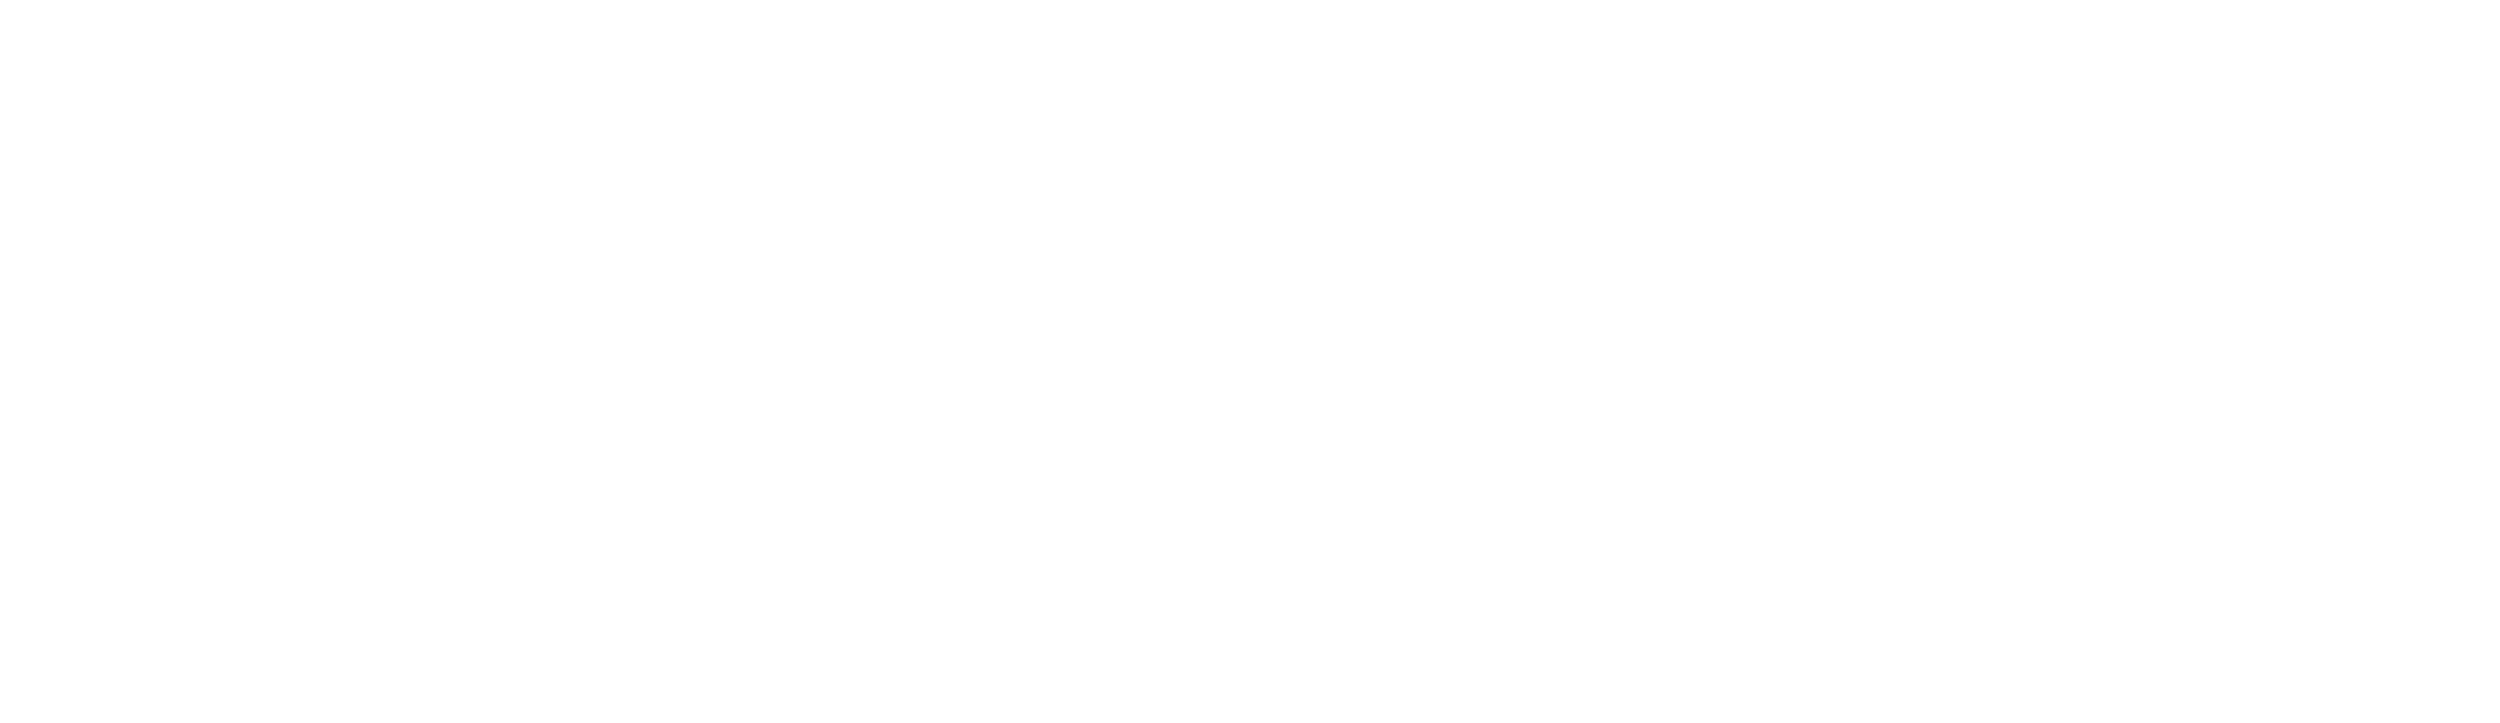 Polygon Treehouse